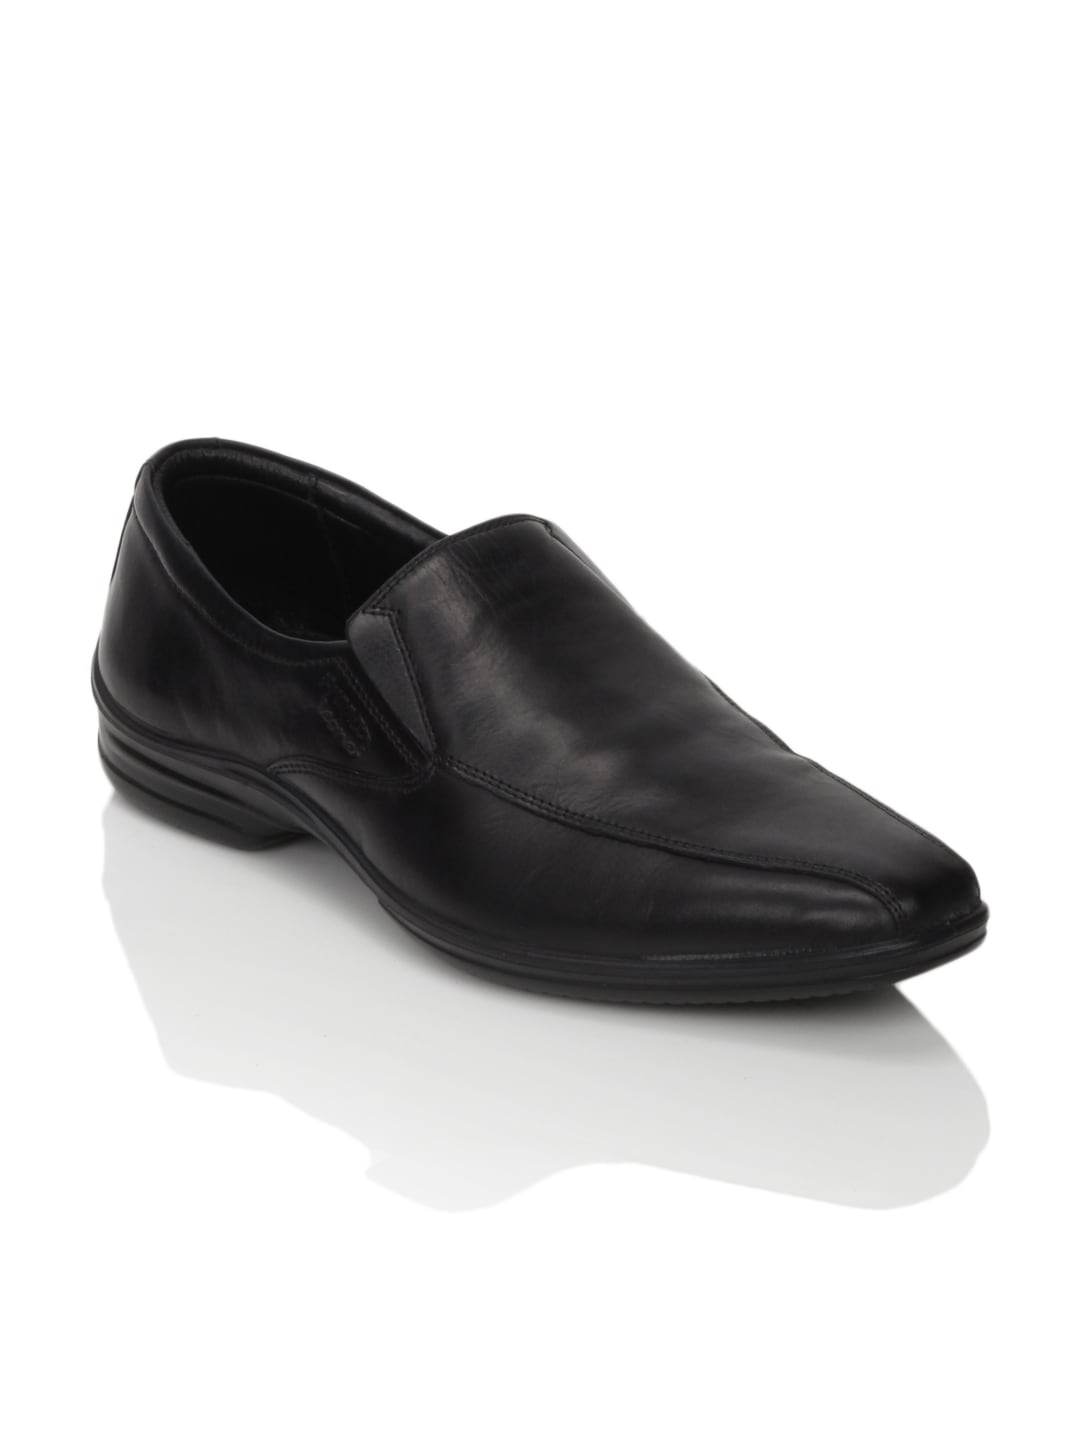 Franco Leone Men Slip On Black Formal Shoes